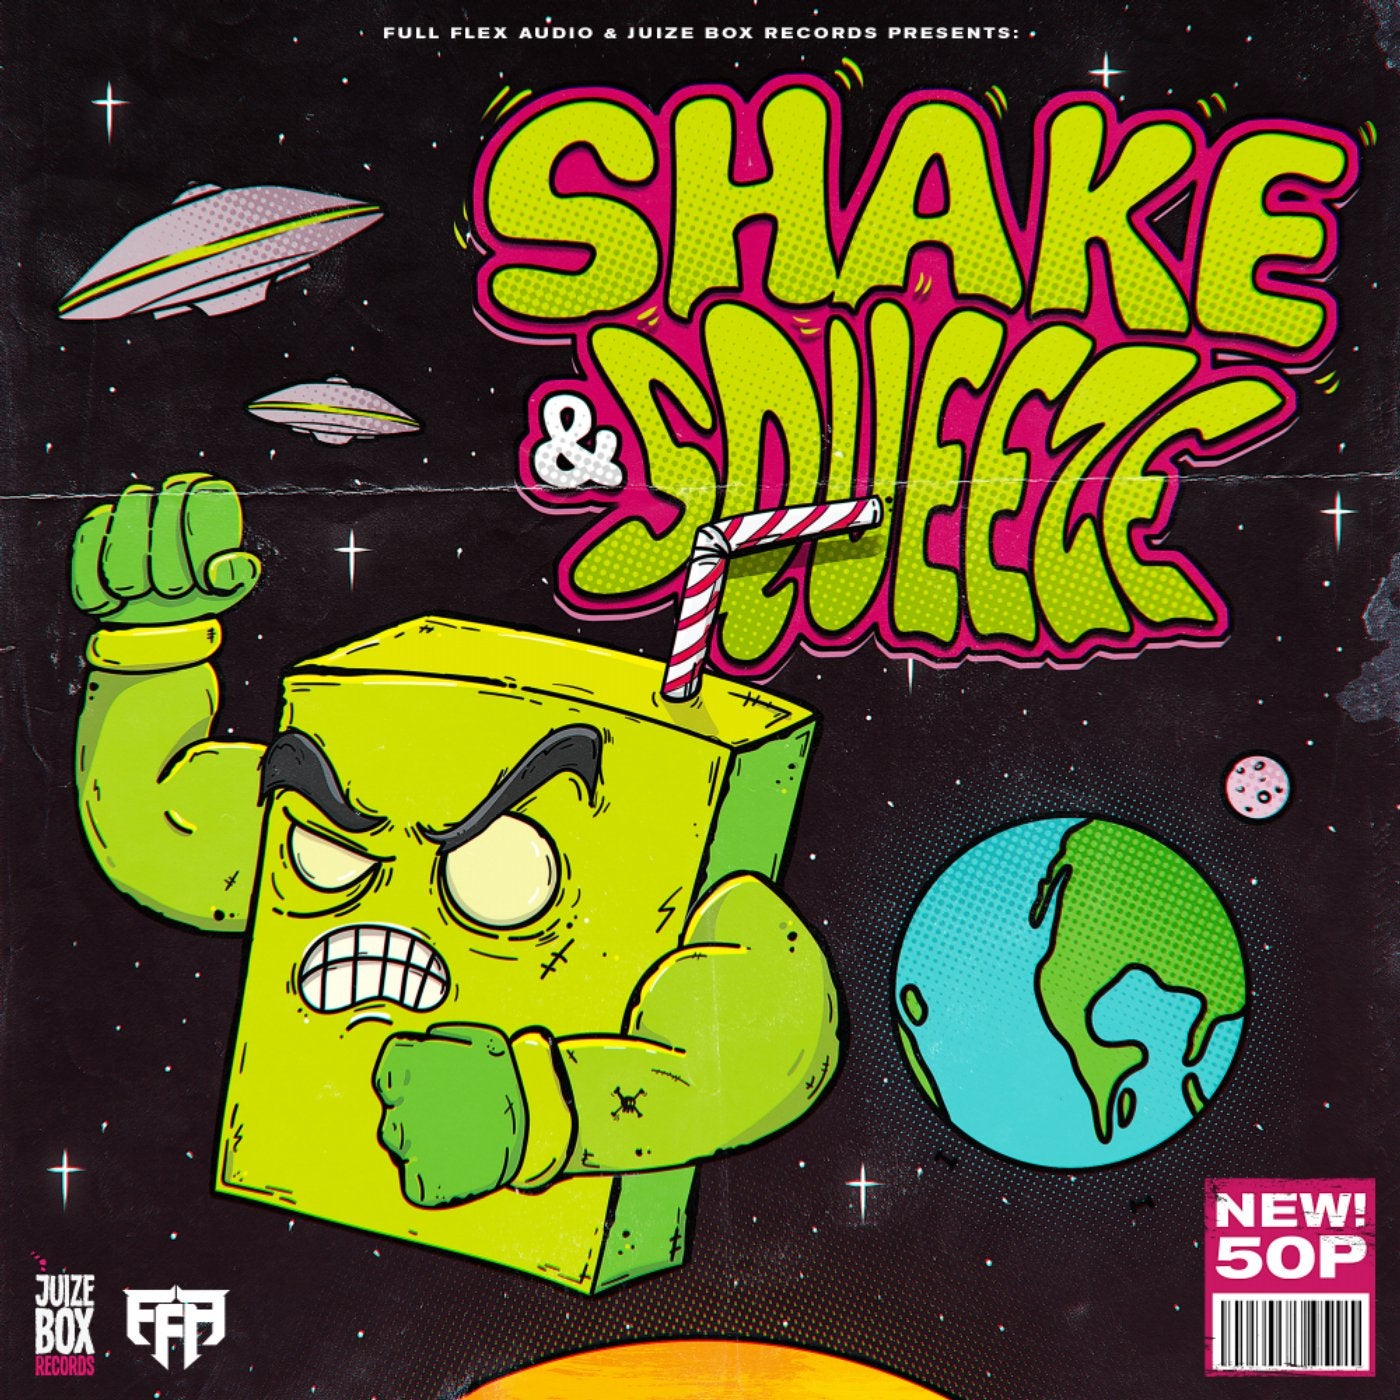 Shake & Squeeze (Juize Box Records x FFA)